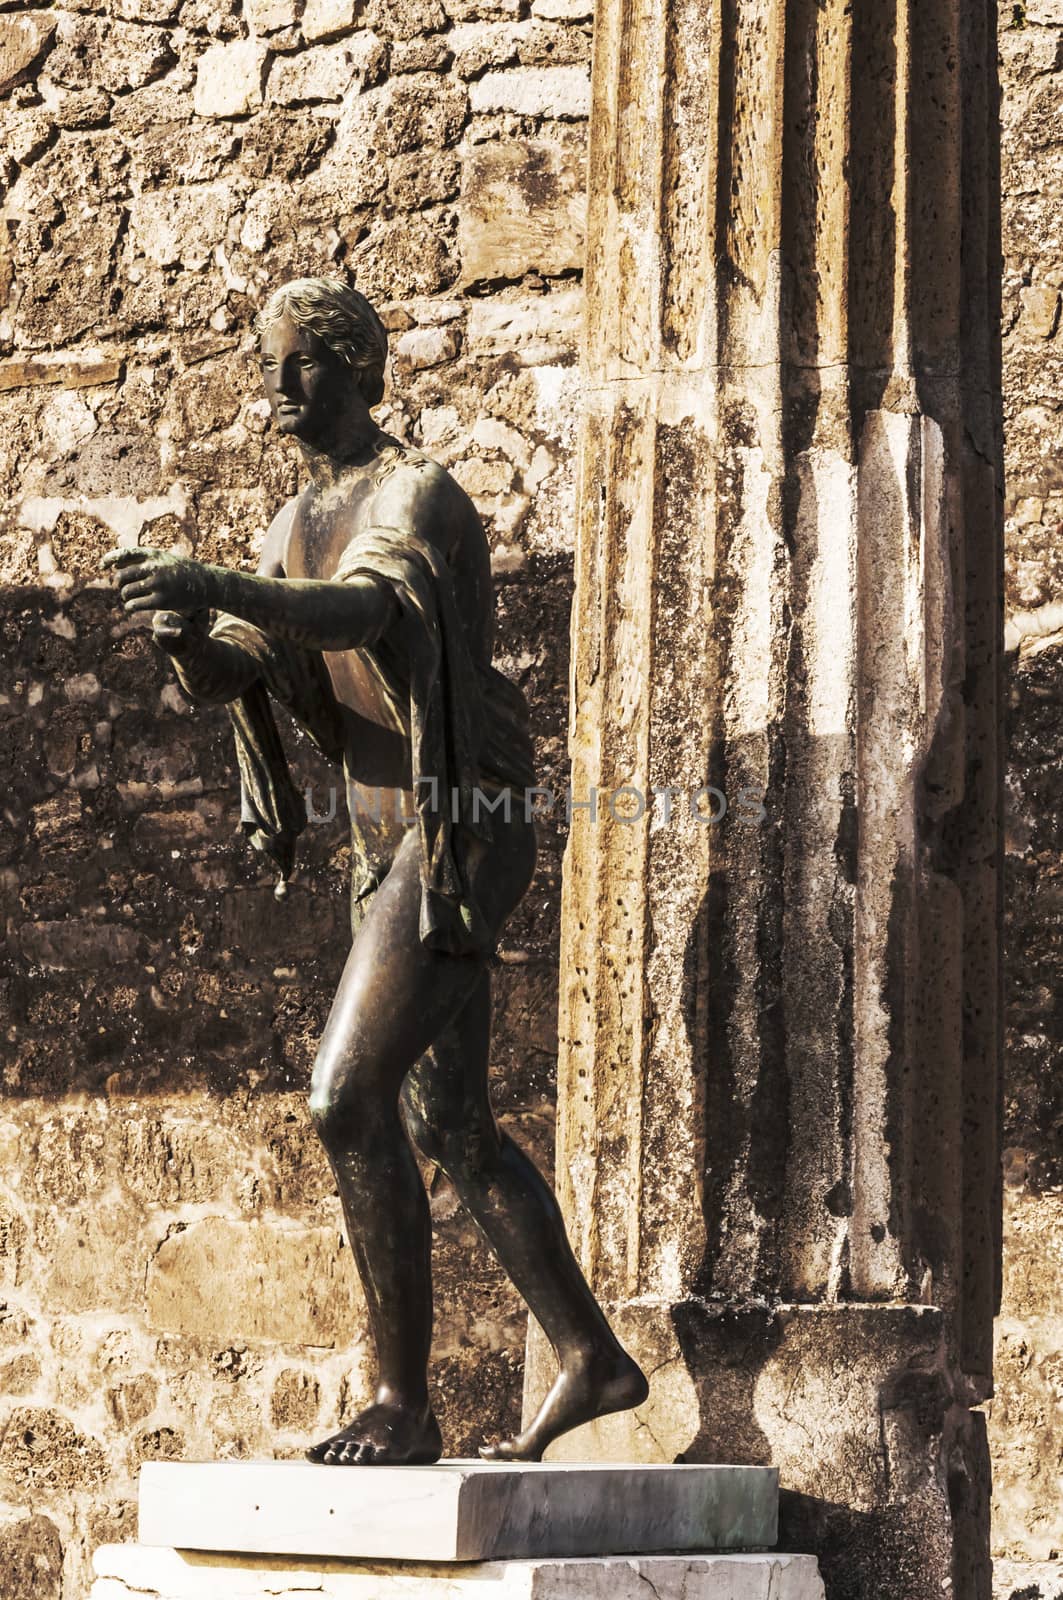 bronze statue inside the pompeii ruins, italy